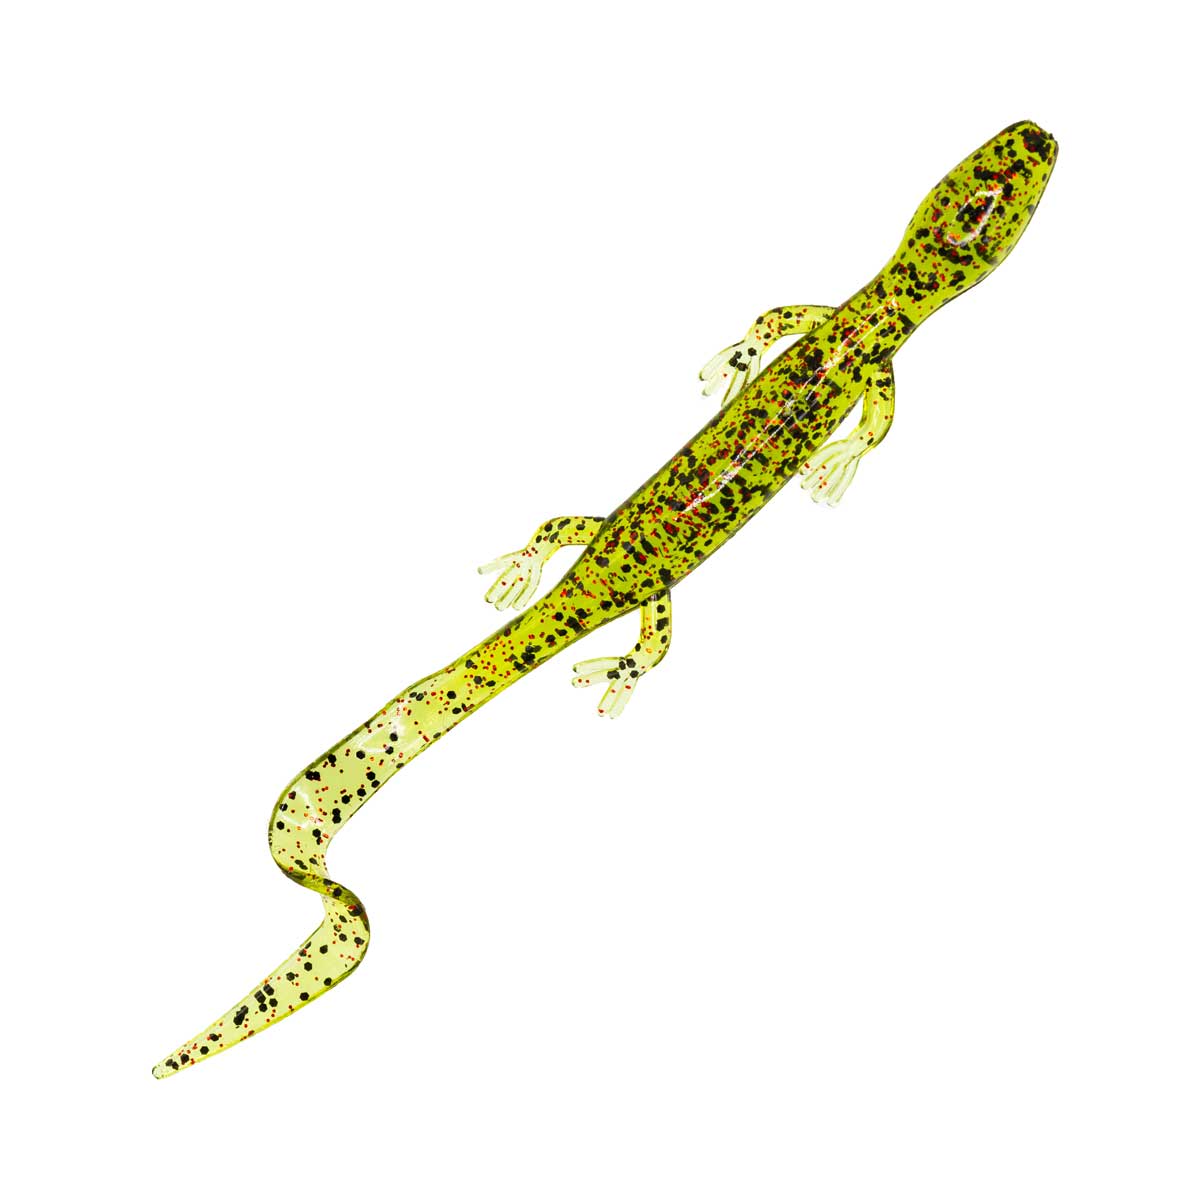 Gecko Lizard Kit – Rite Angler